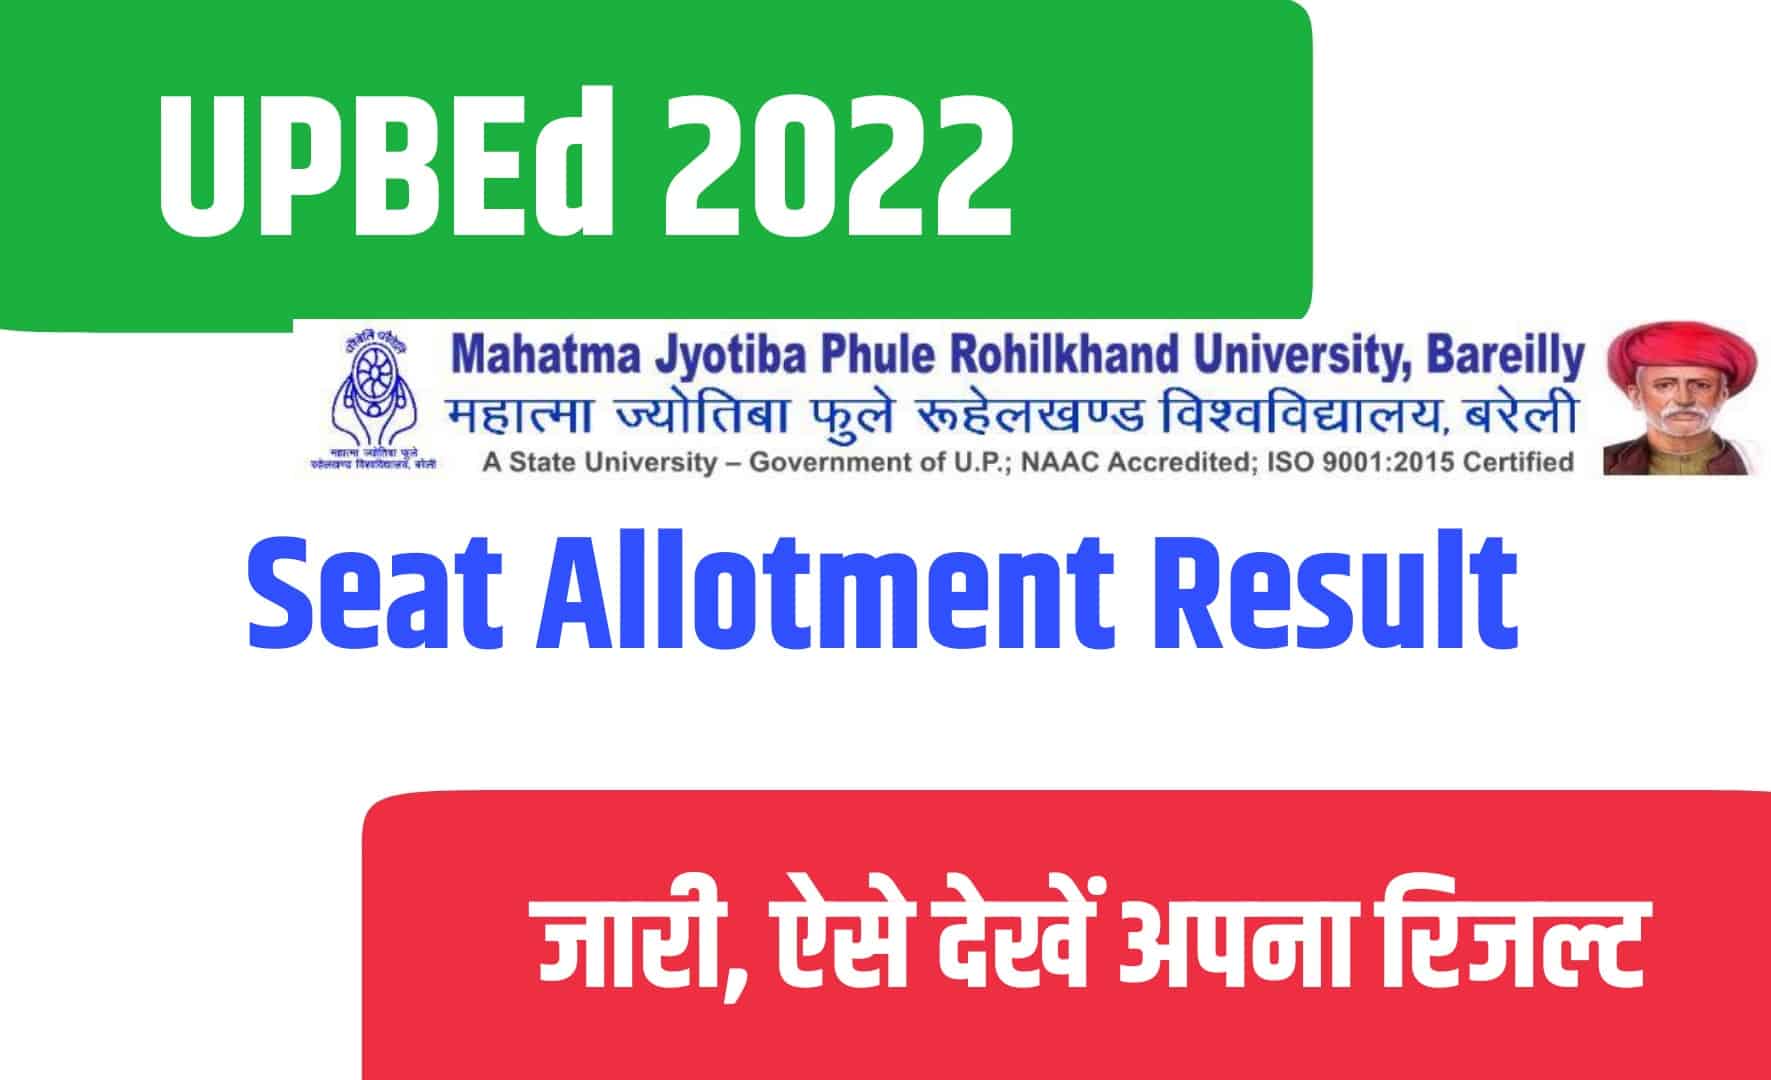 UPBEd 2022 Seat Allotment Result | यूपीबीएड सीट अलॉटमेंट रिजल्ट 2022